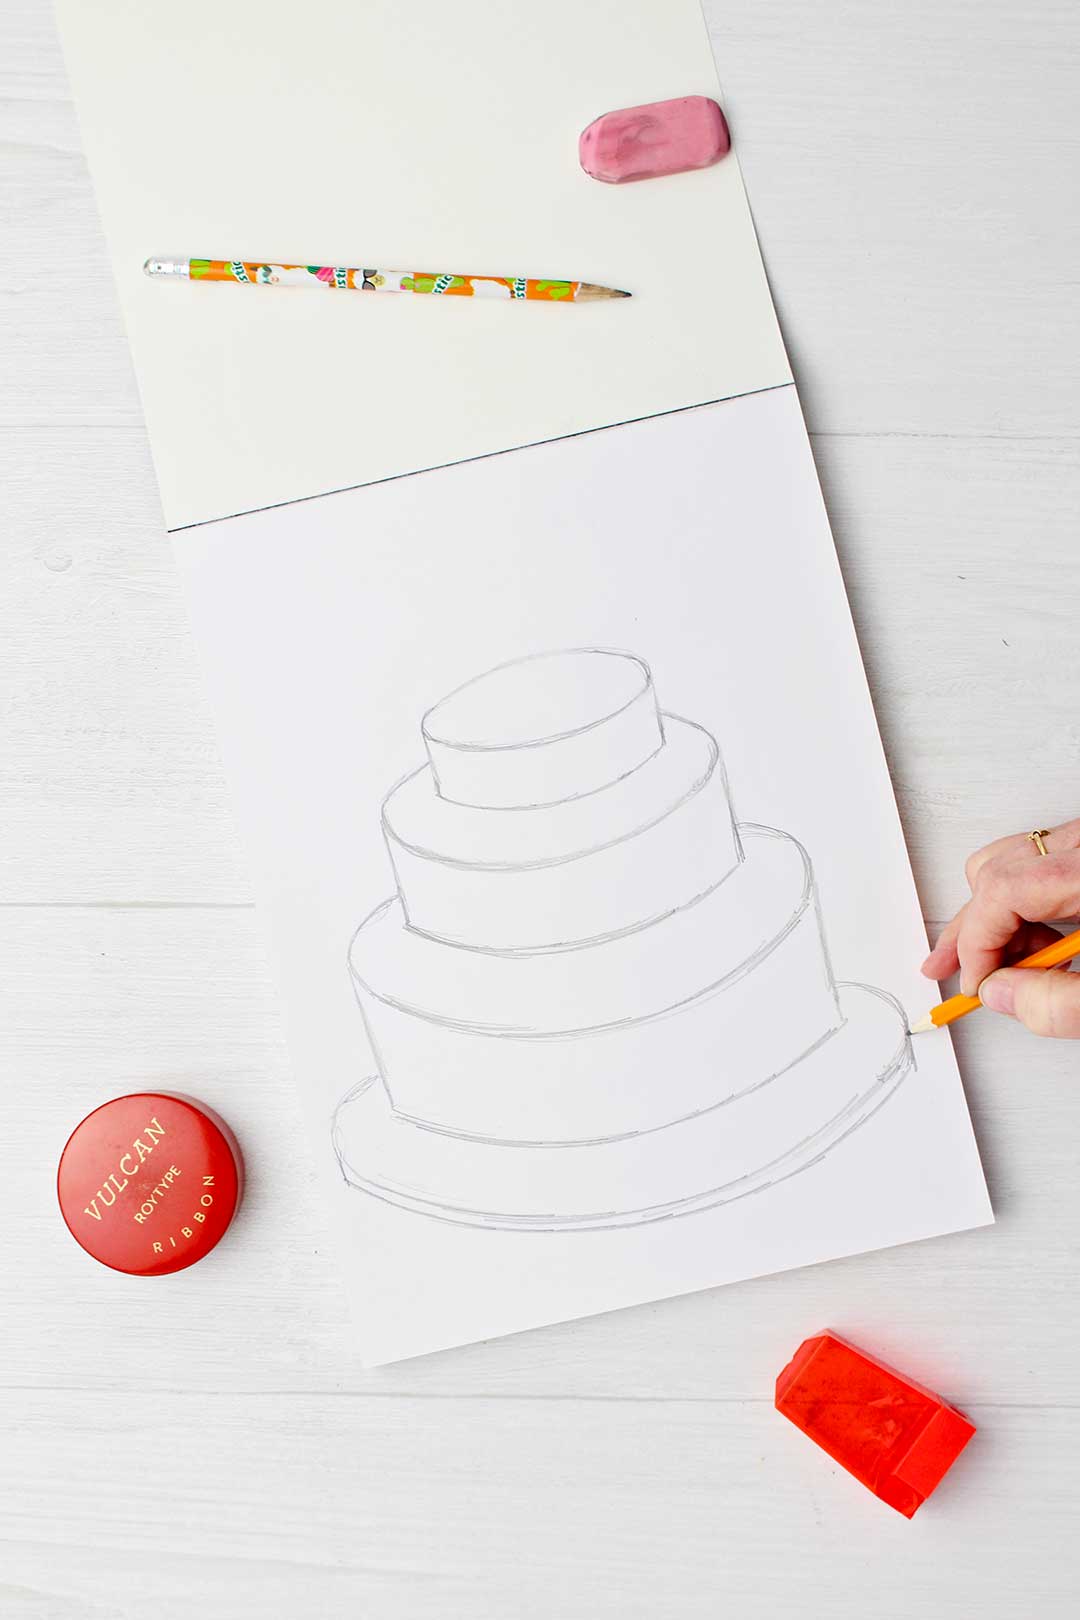 Hand sketching final bottom tier of wedding cake.